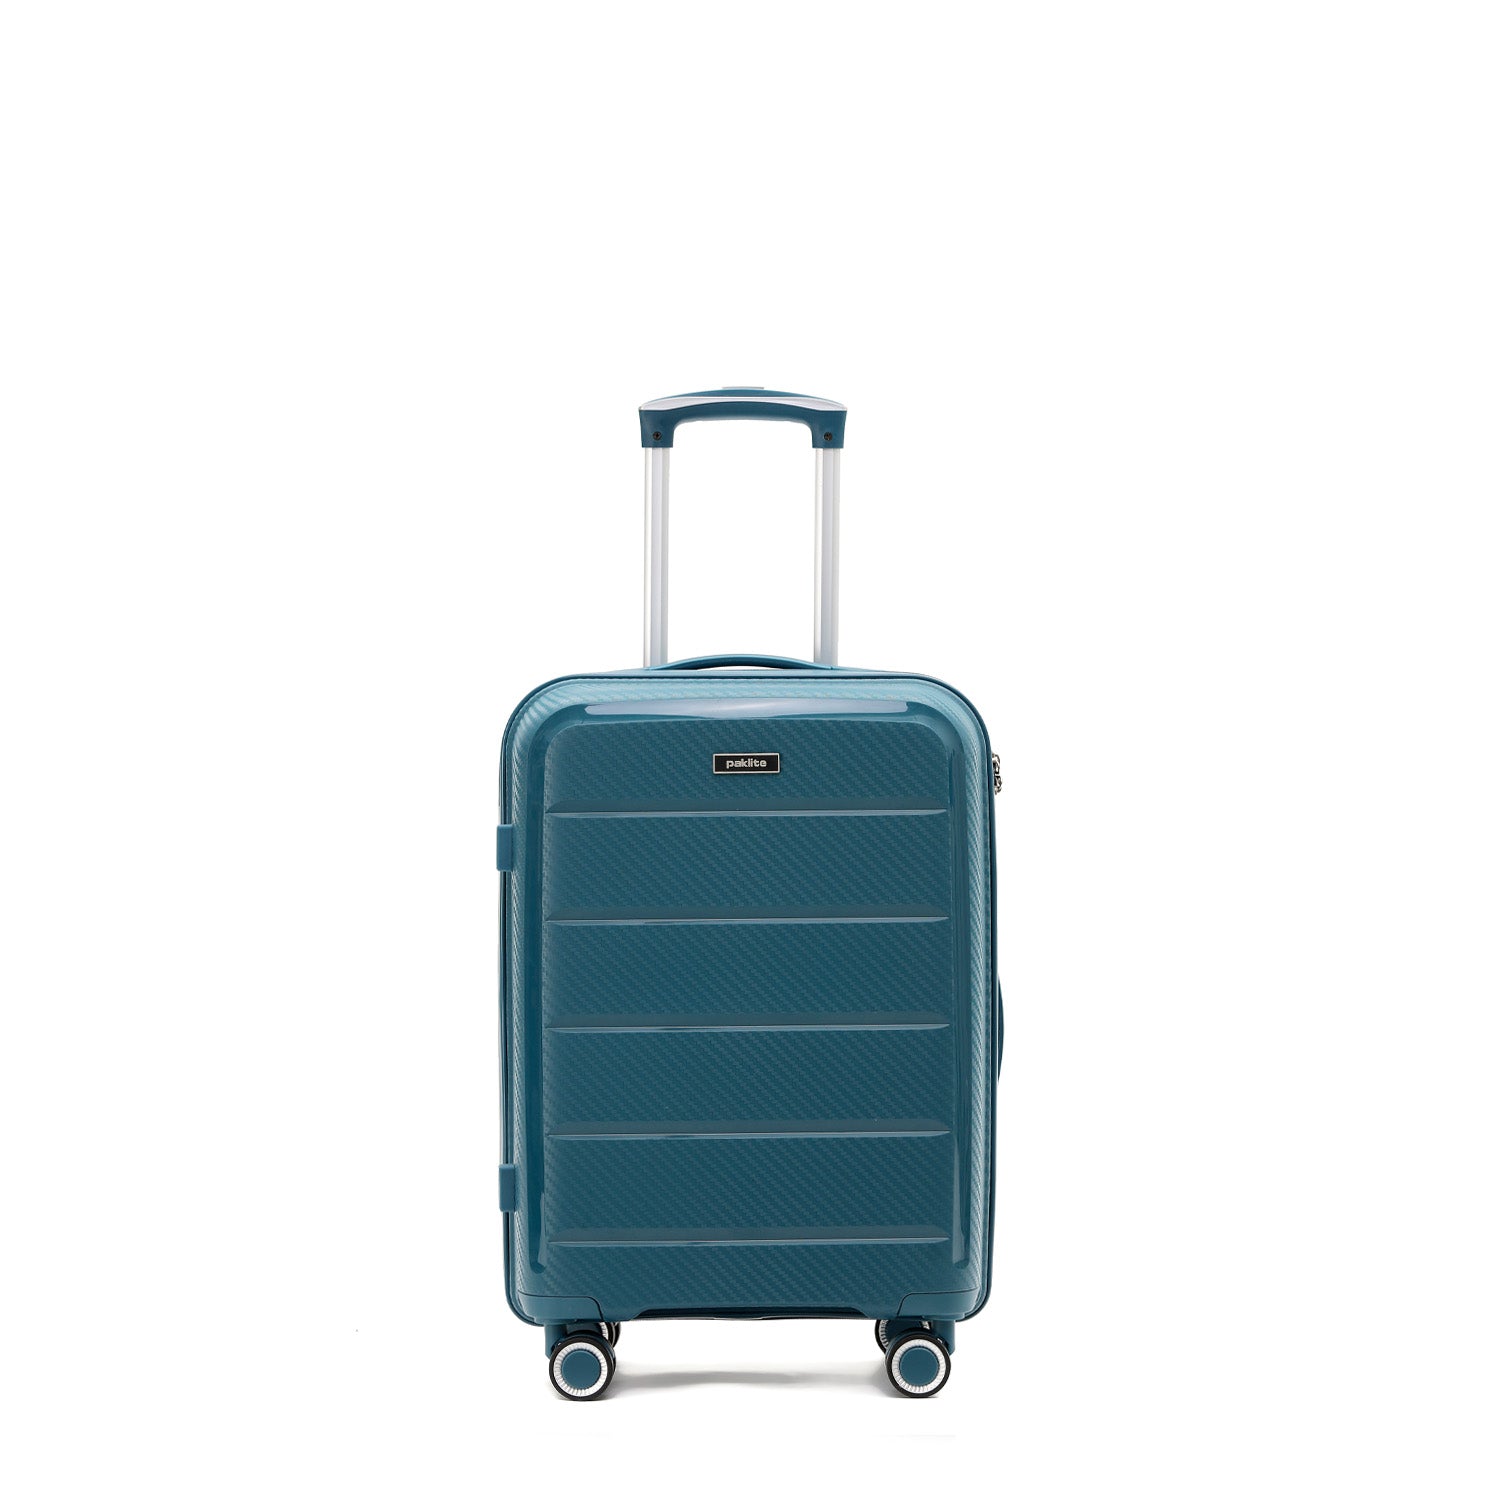 Paklite - PA7350 Set of 3 Suitcases - Blue-16